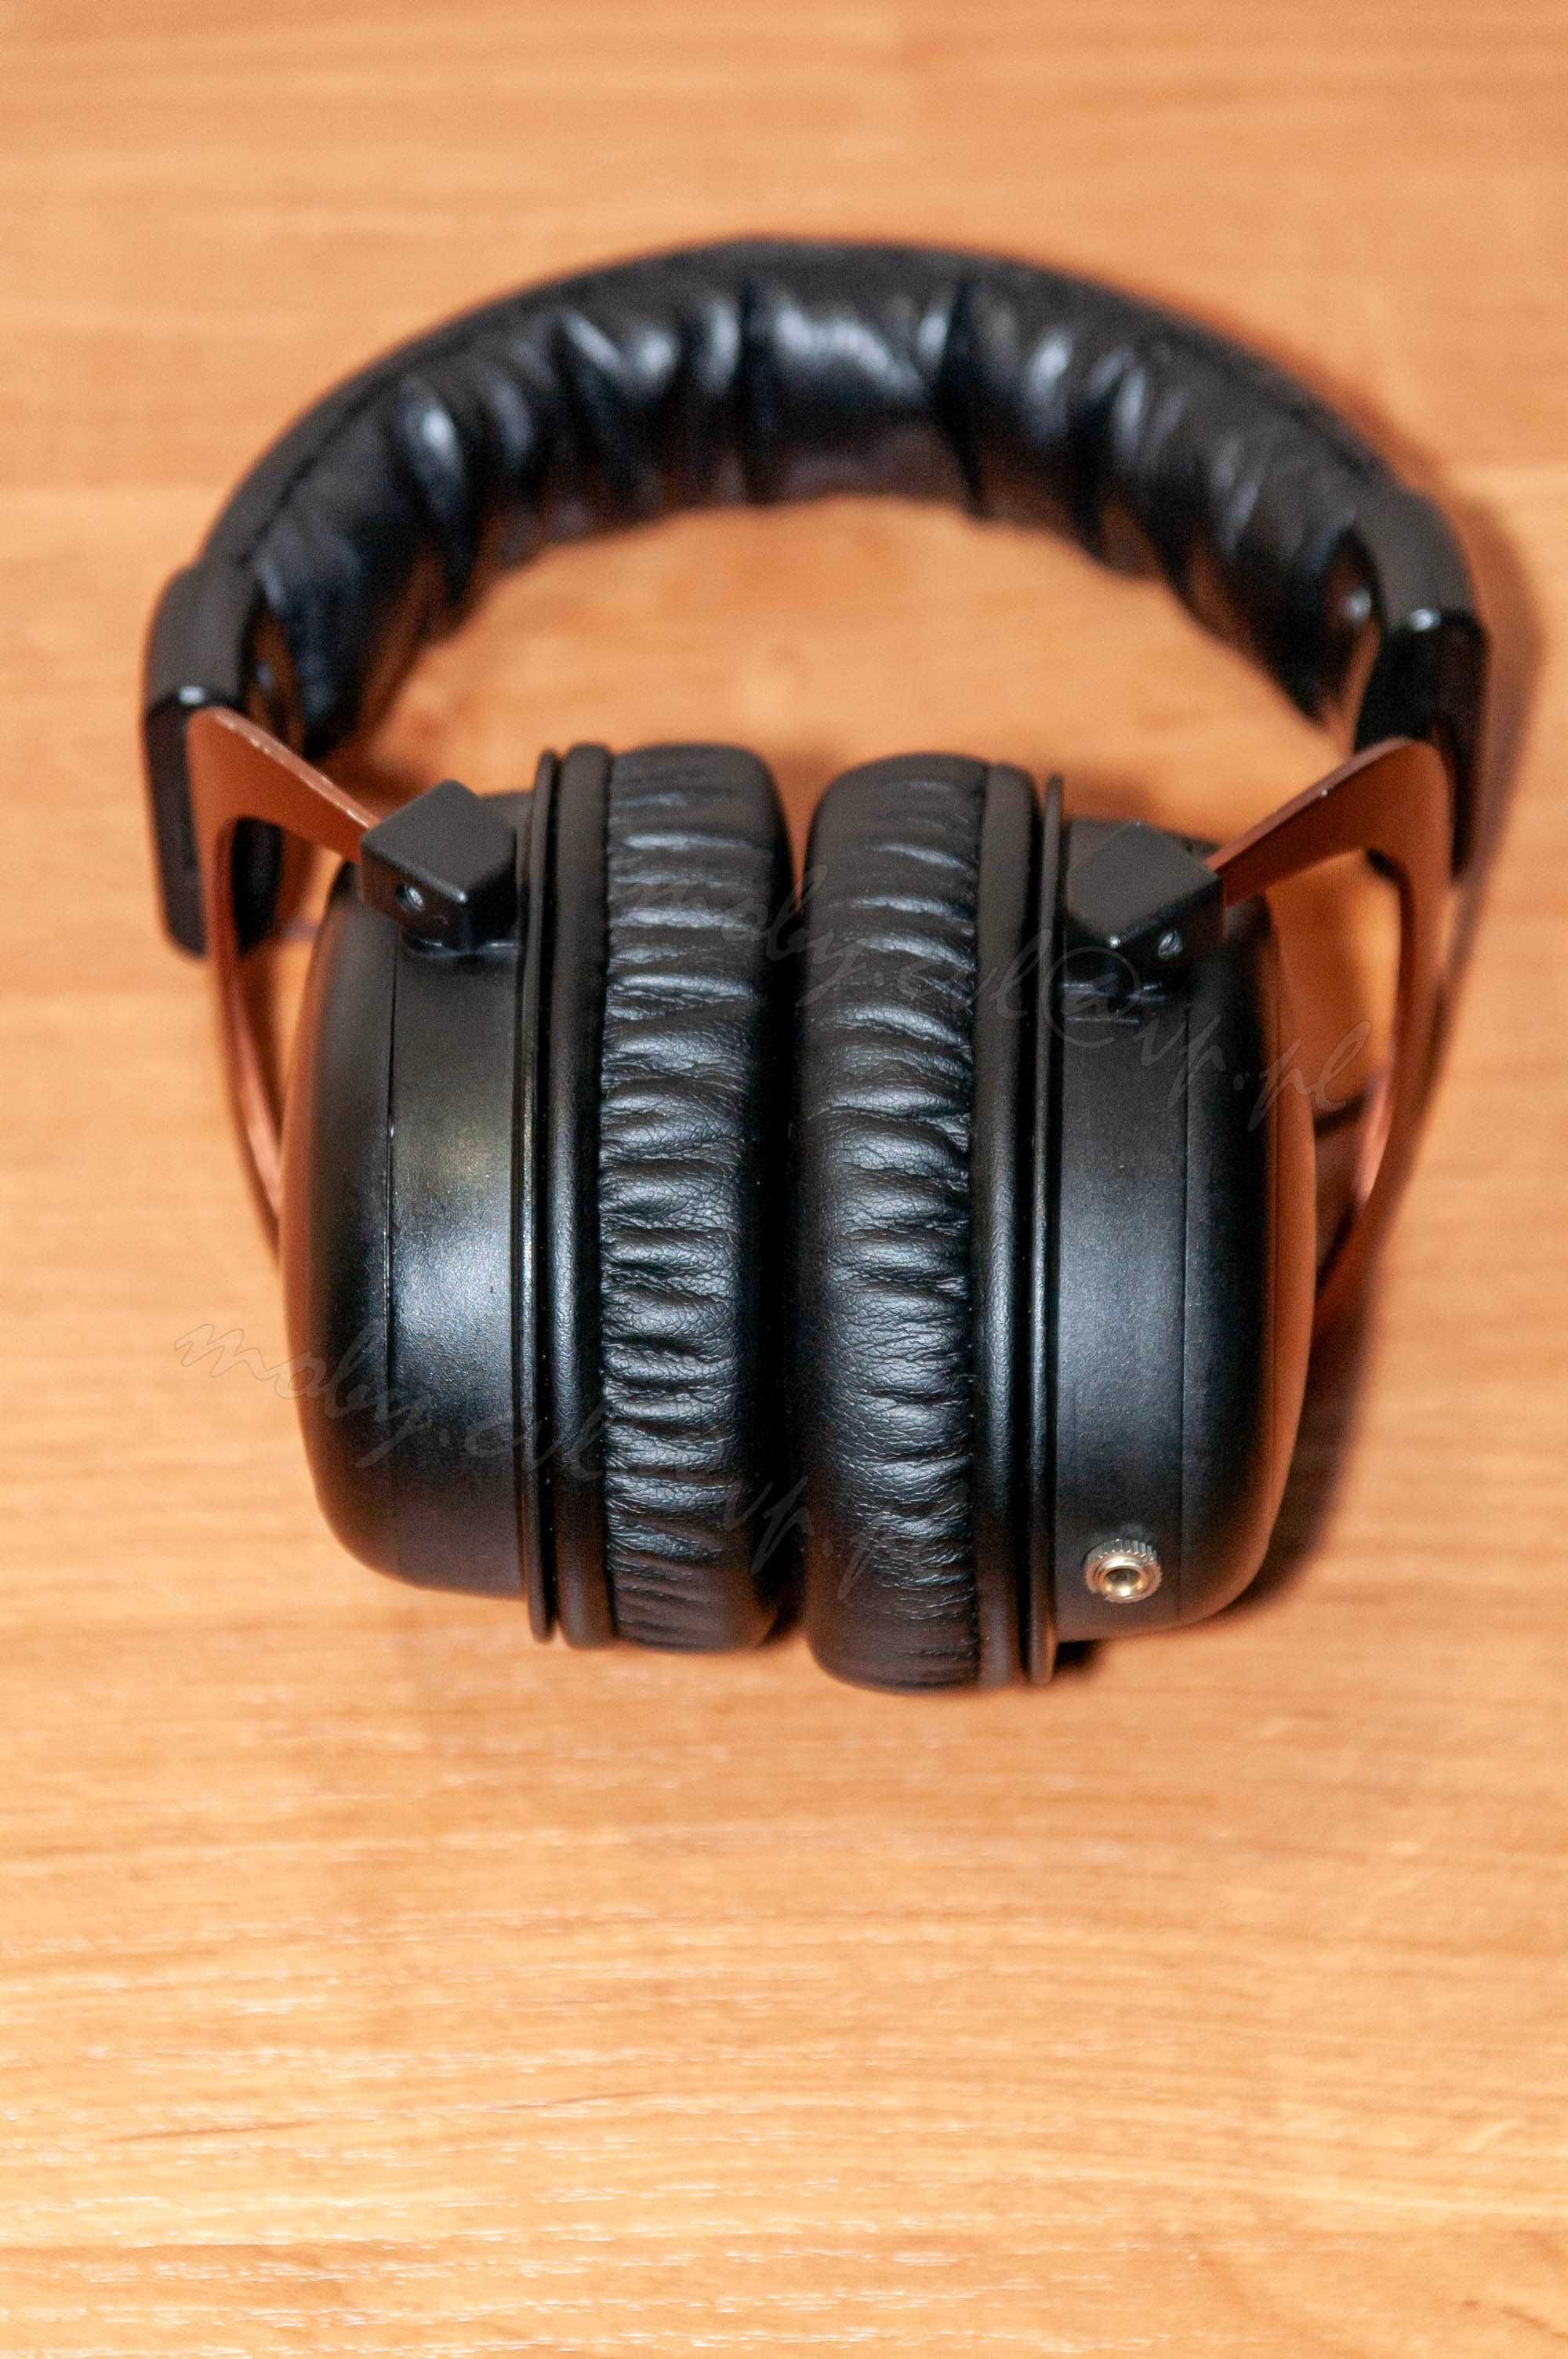 Słuchawki ISK MHD 8500